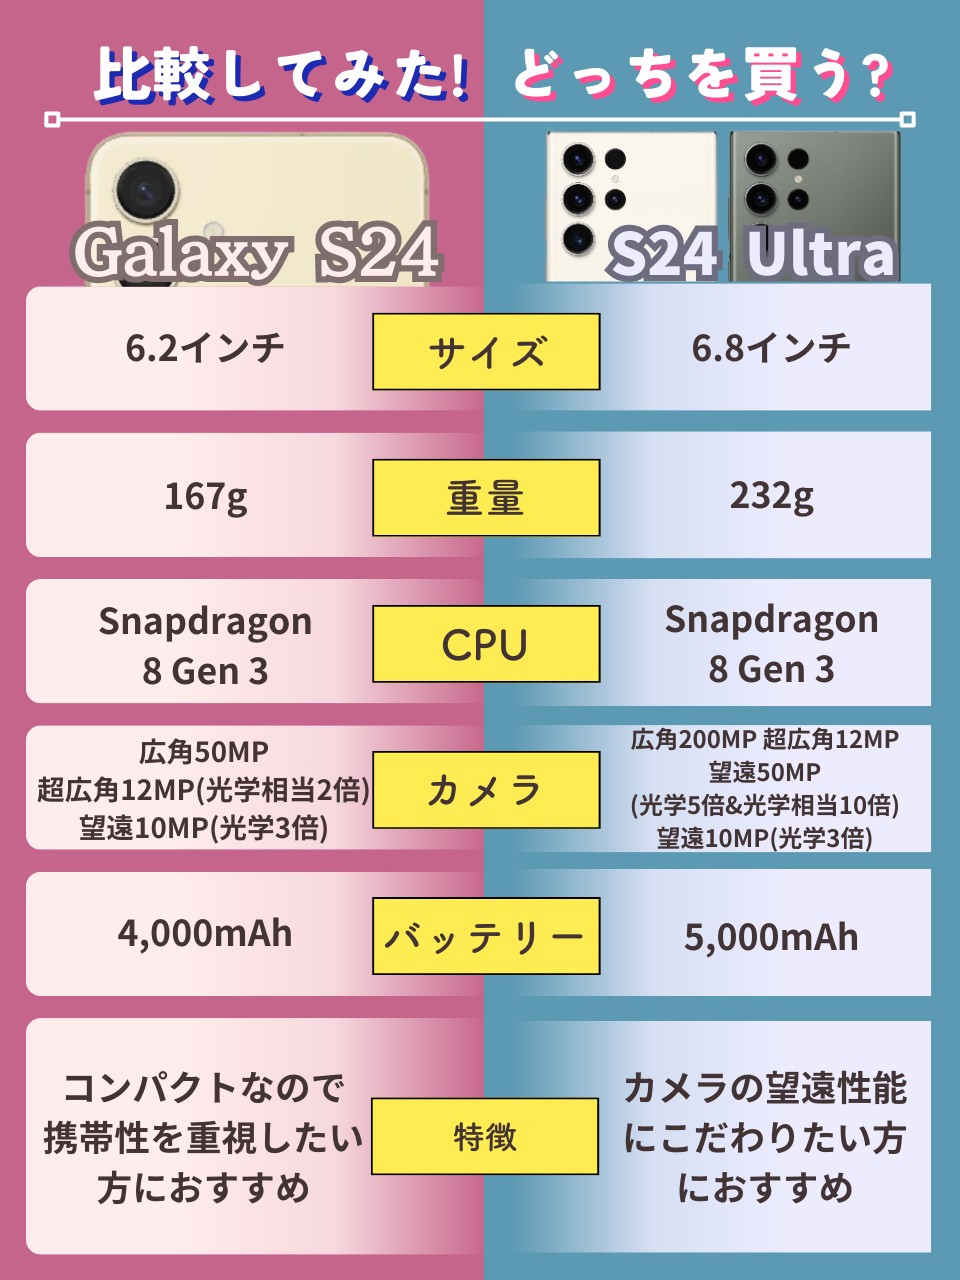 Galaxy S24 VS Galaxy S24 Ultra